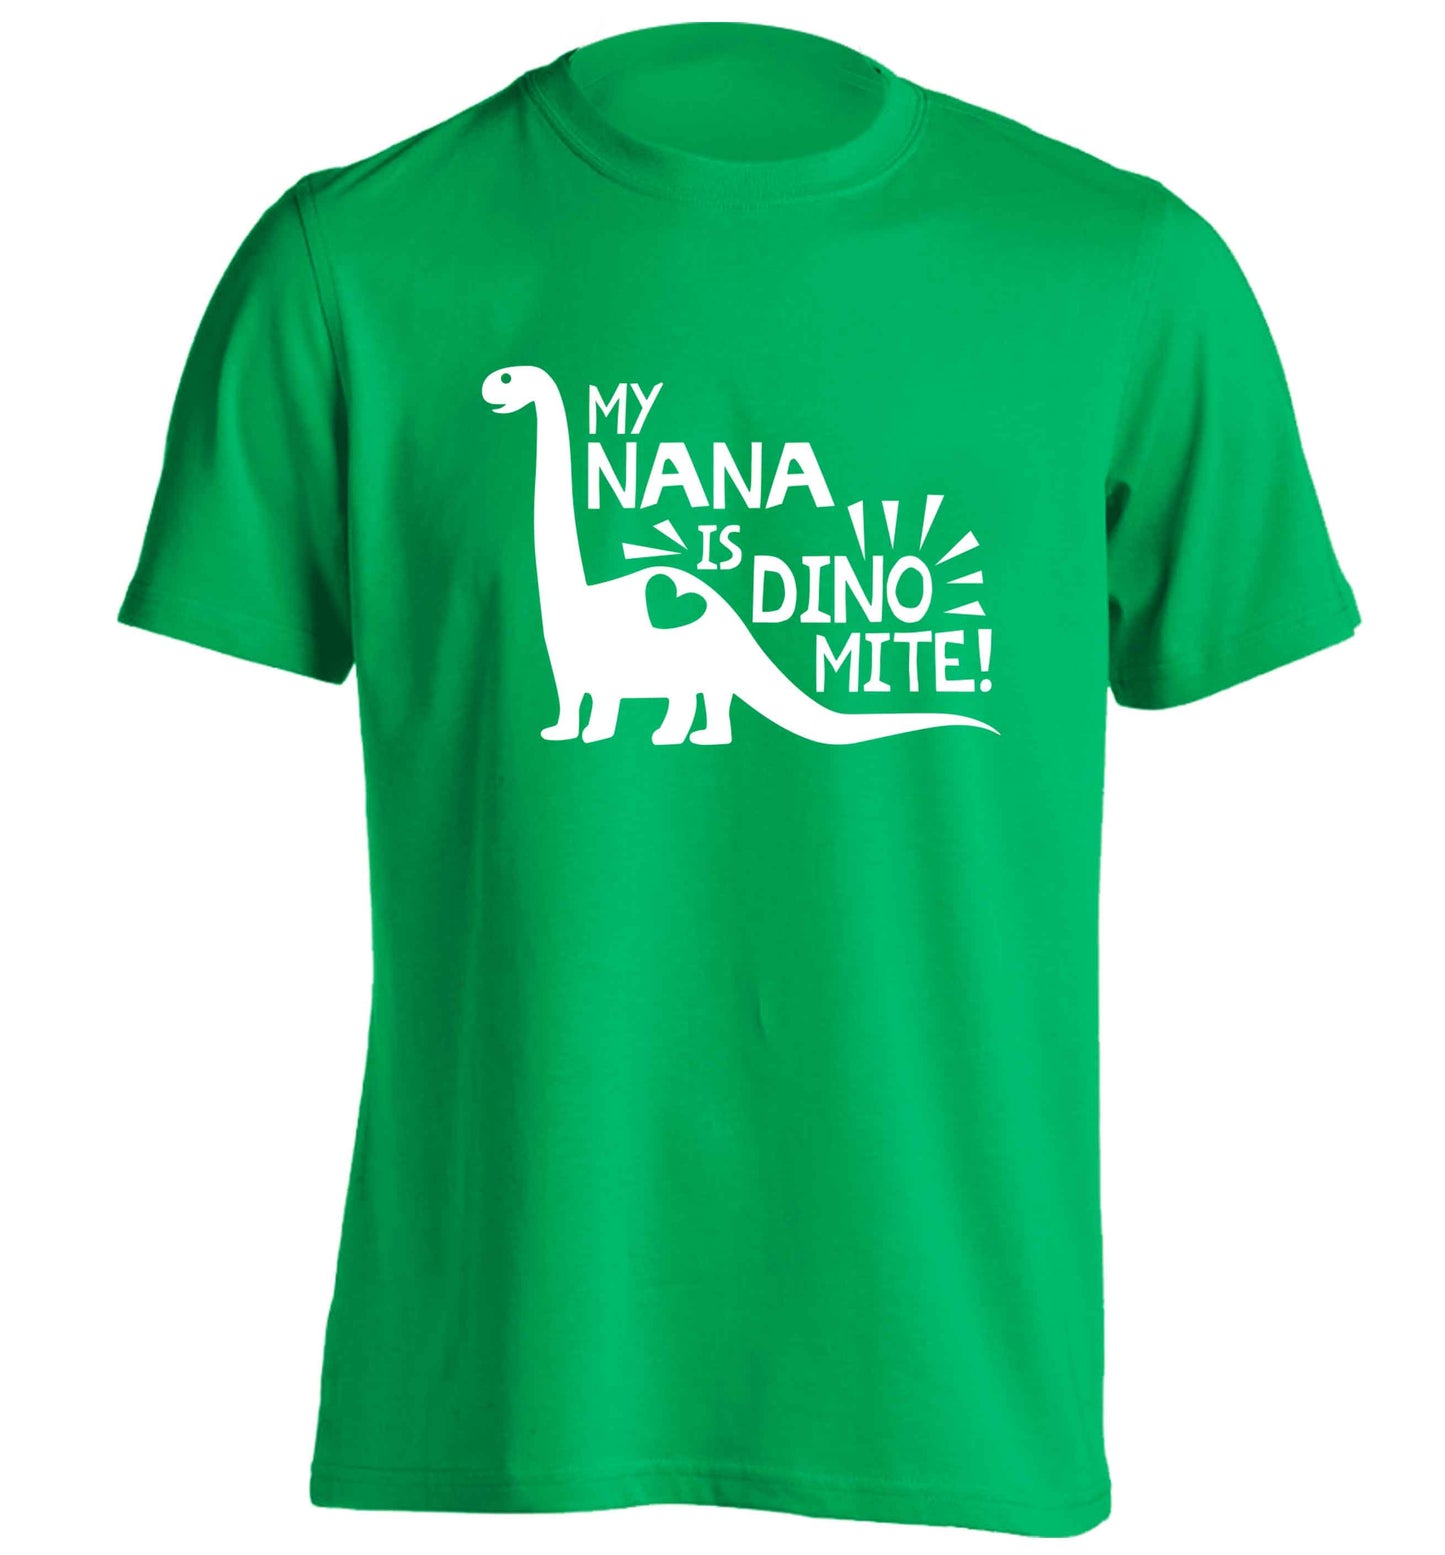 My nana is dinomite! adults unisex green Tshirt 2XL